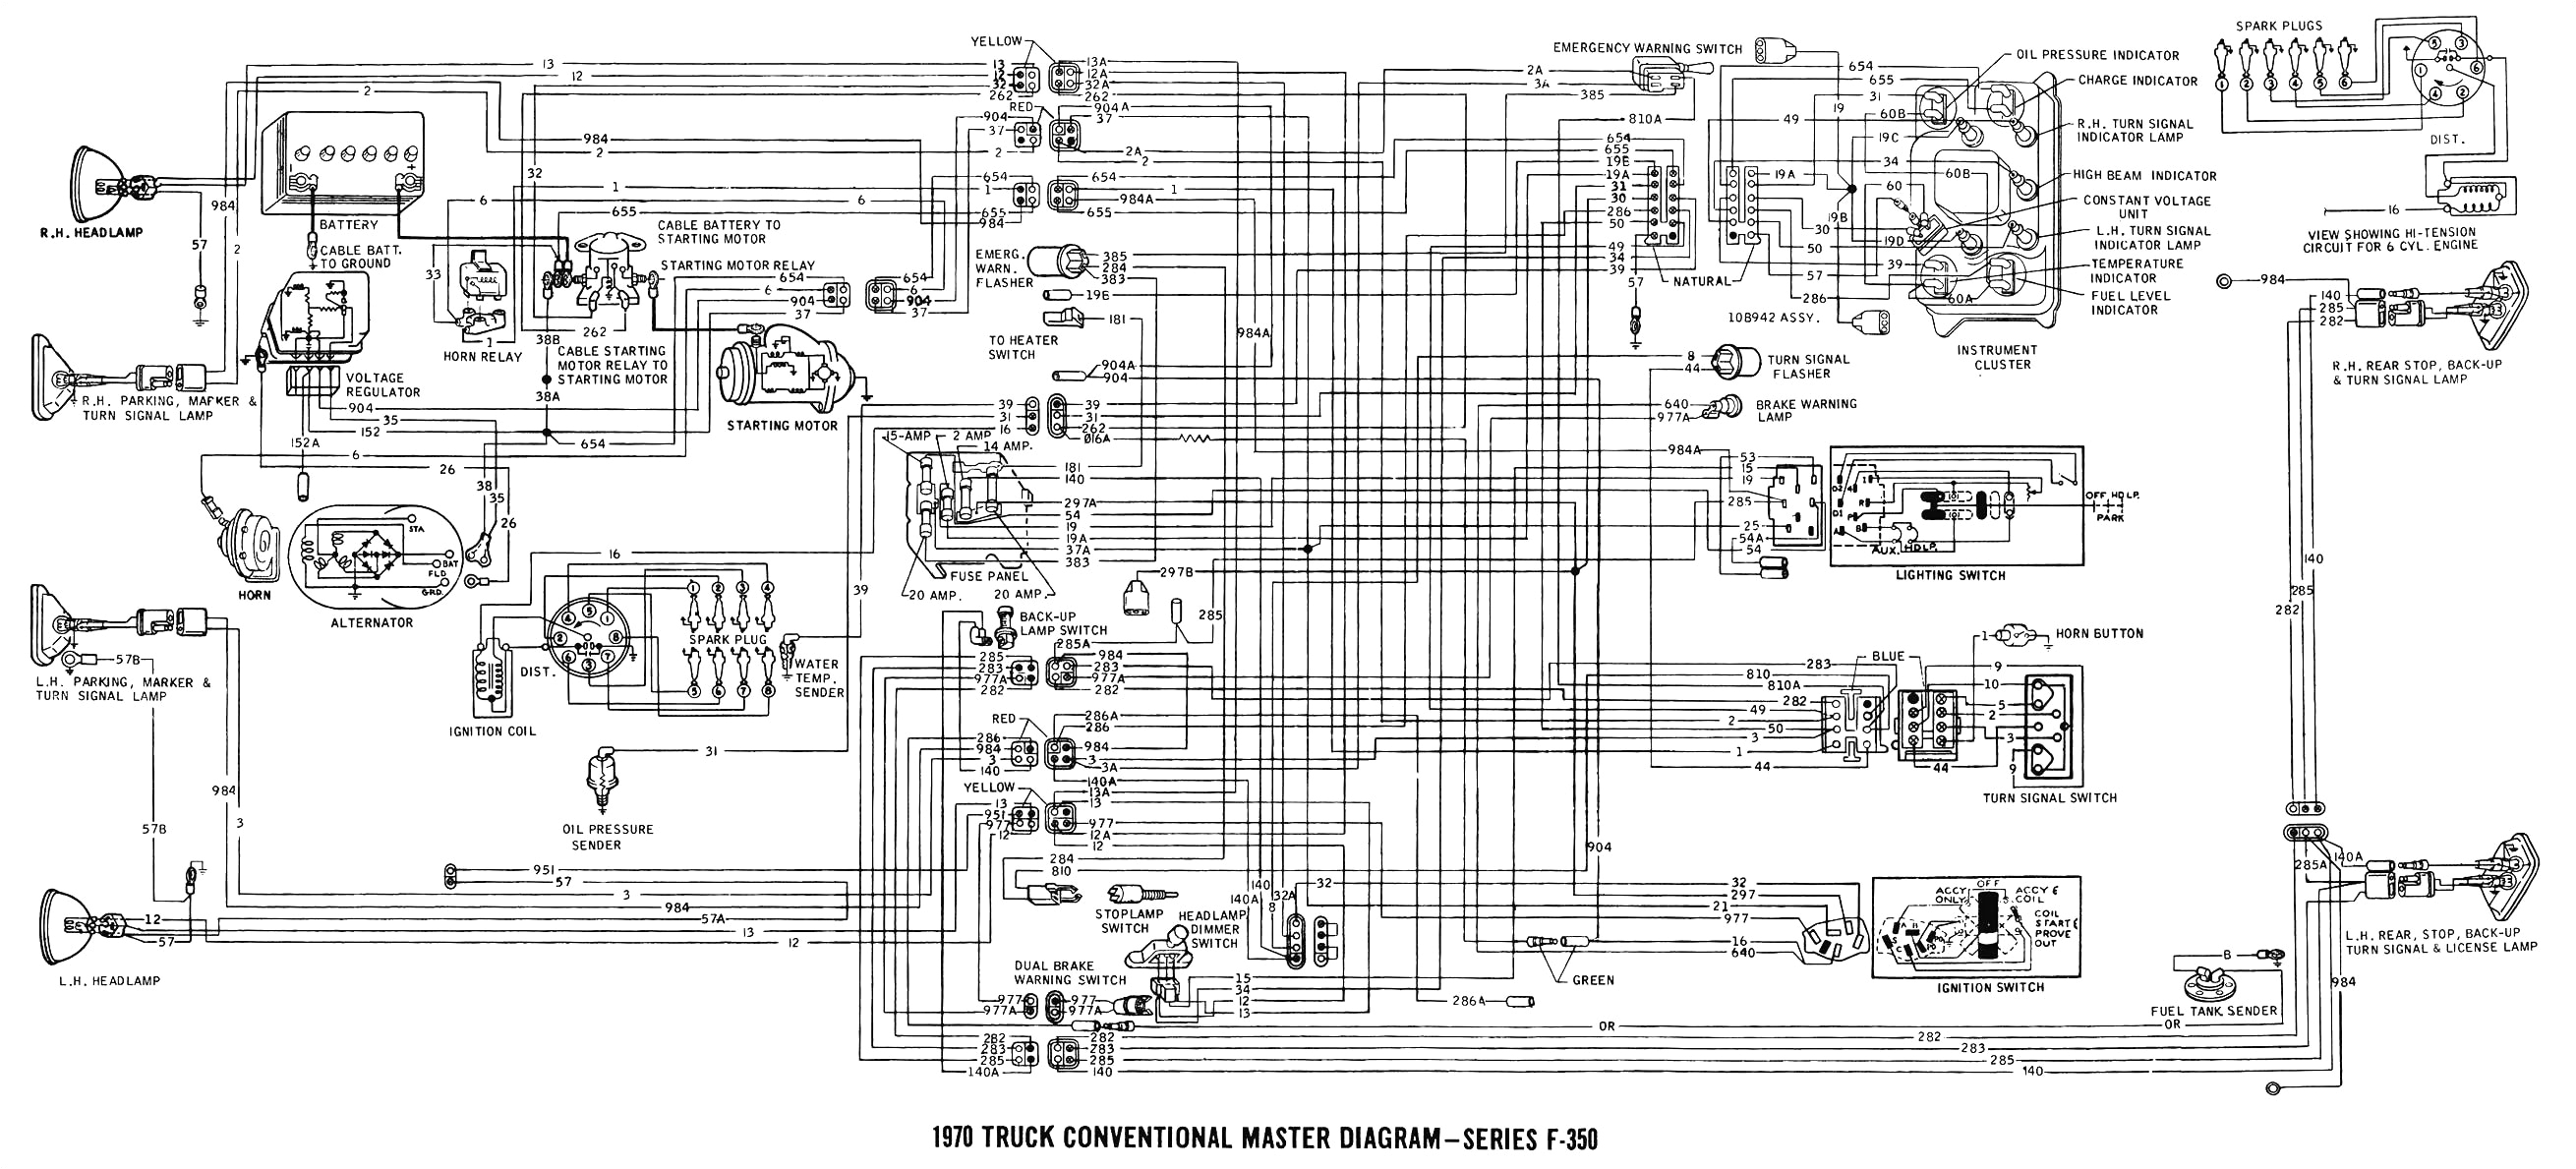 1993 ford l8000 wiring diagram wiring diagram blog 1982 ford l8000 wiring diagram